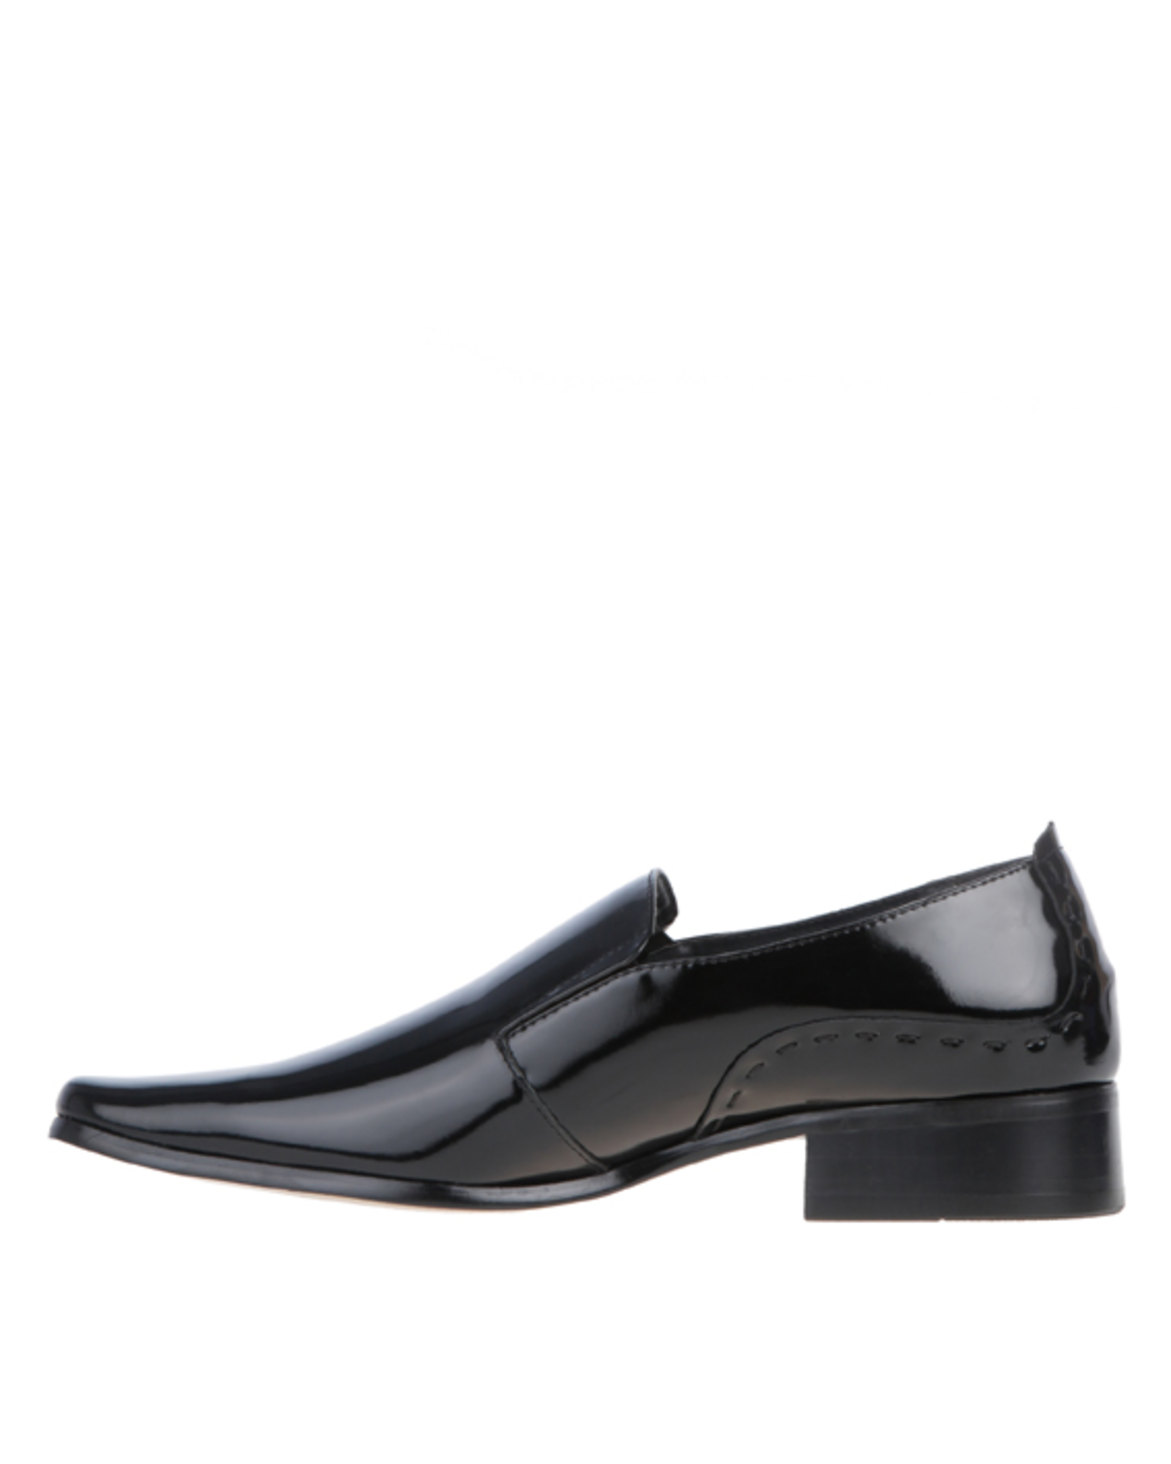 Pierre Cardin Dress Shoes Black | Zando